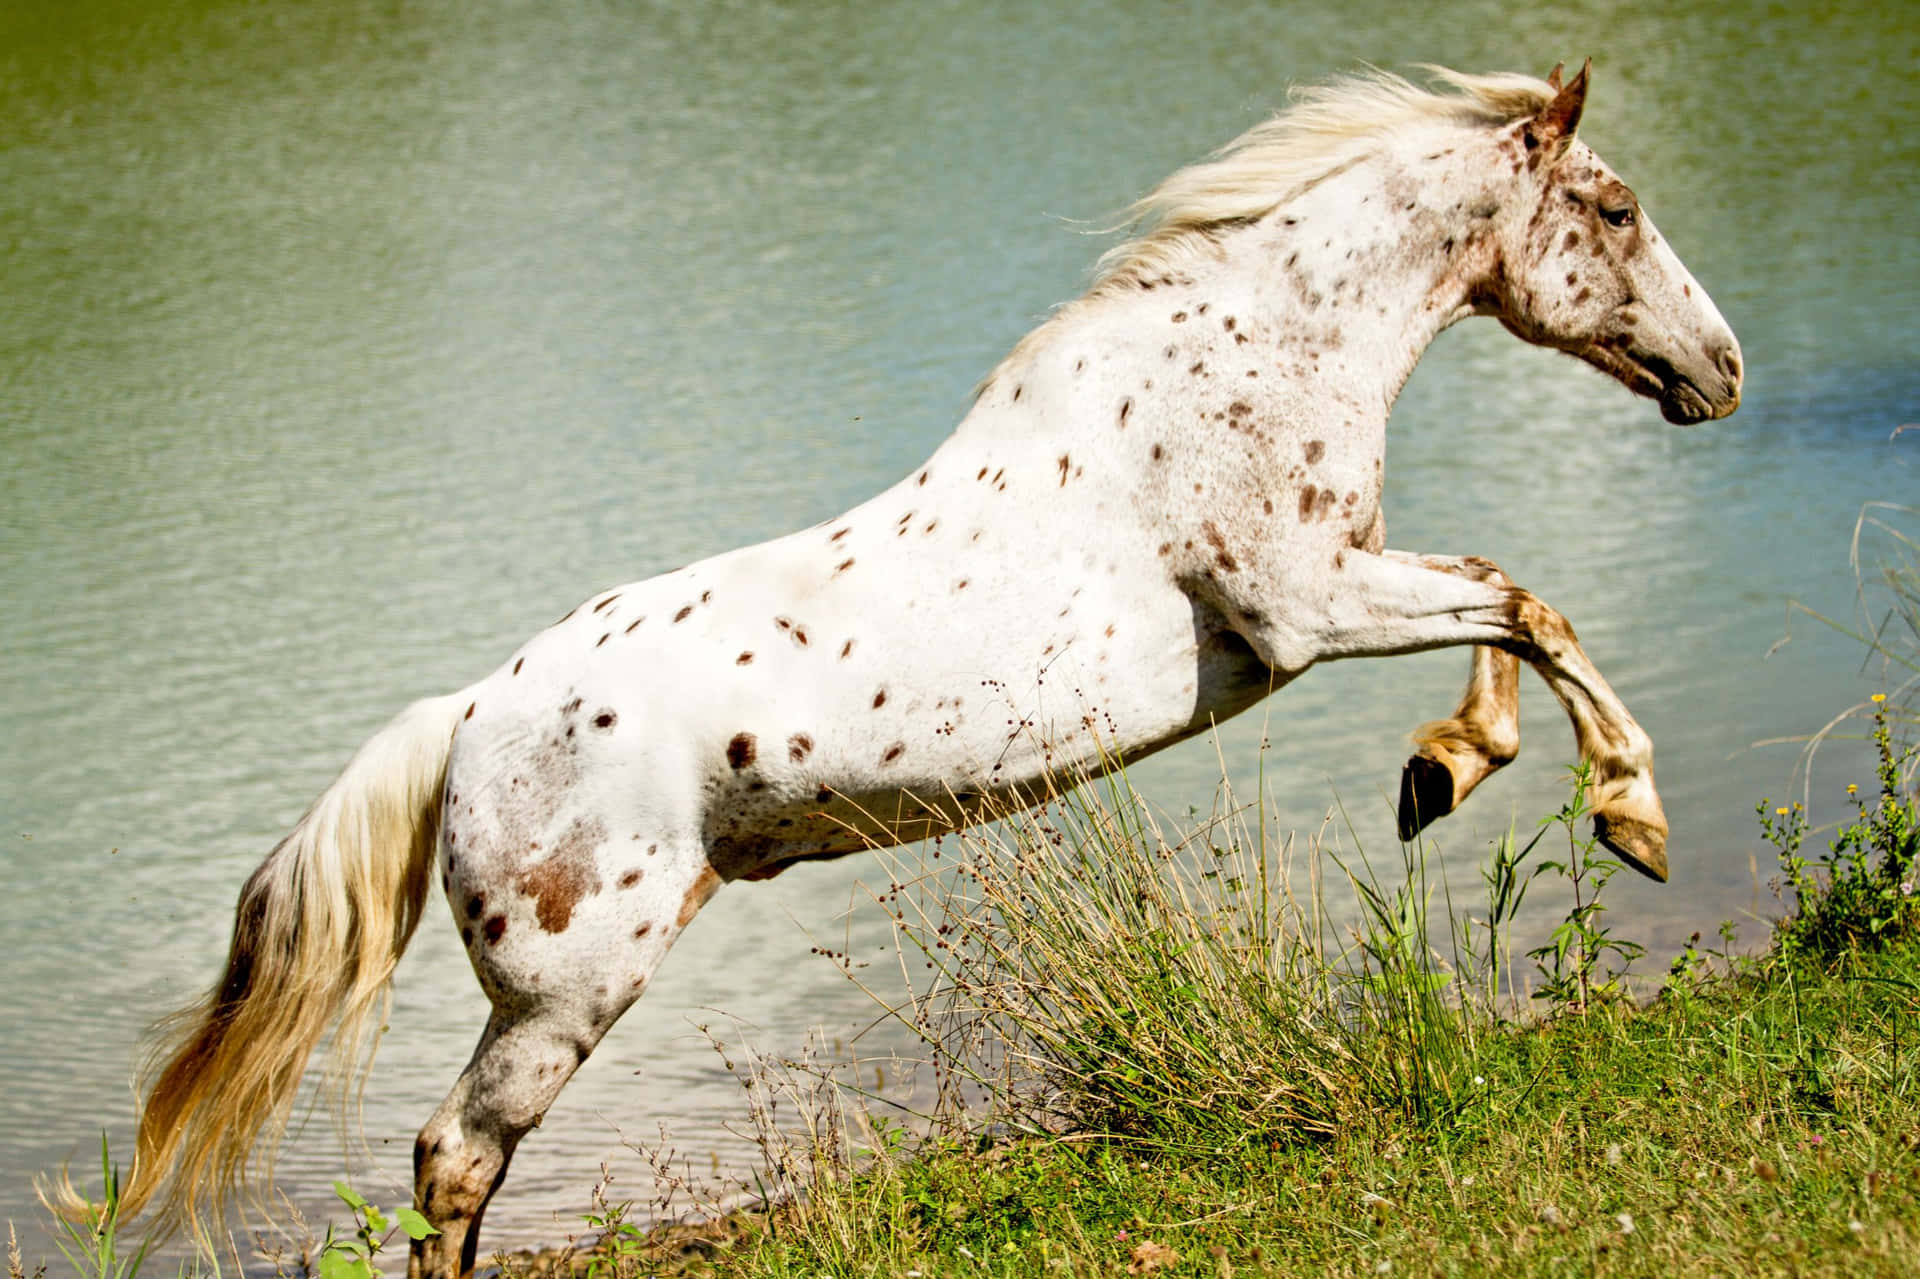 The Majestic Appaloosa Horse